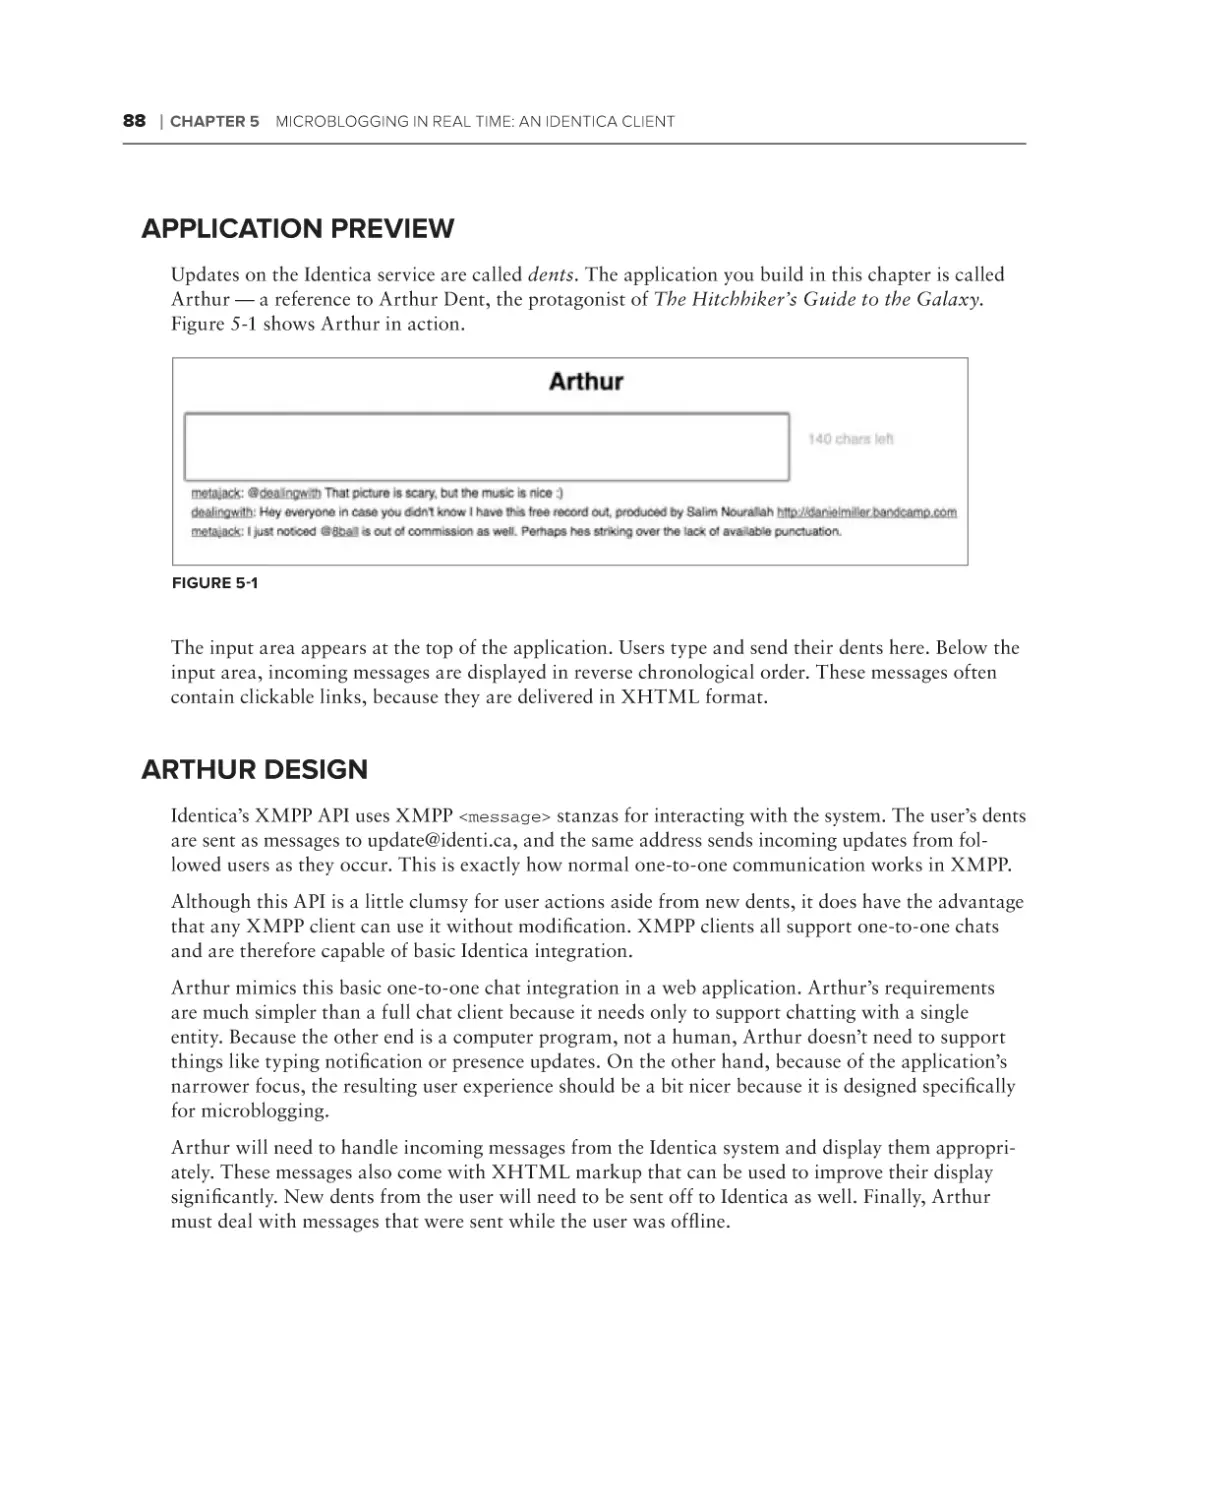 Application Preview
Arthur Design